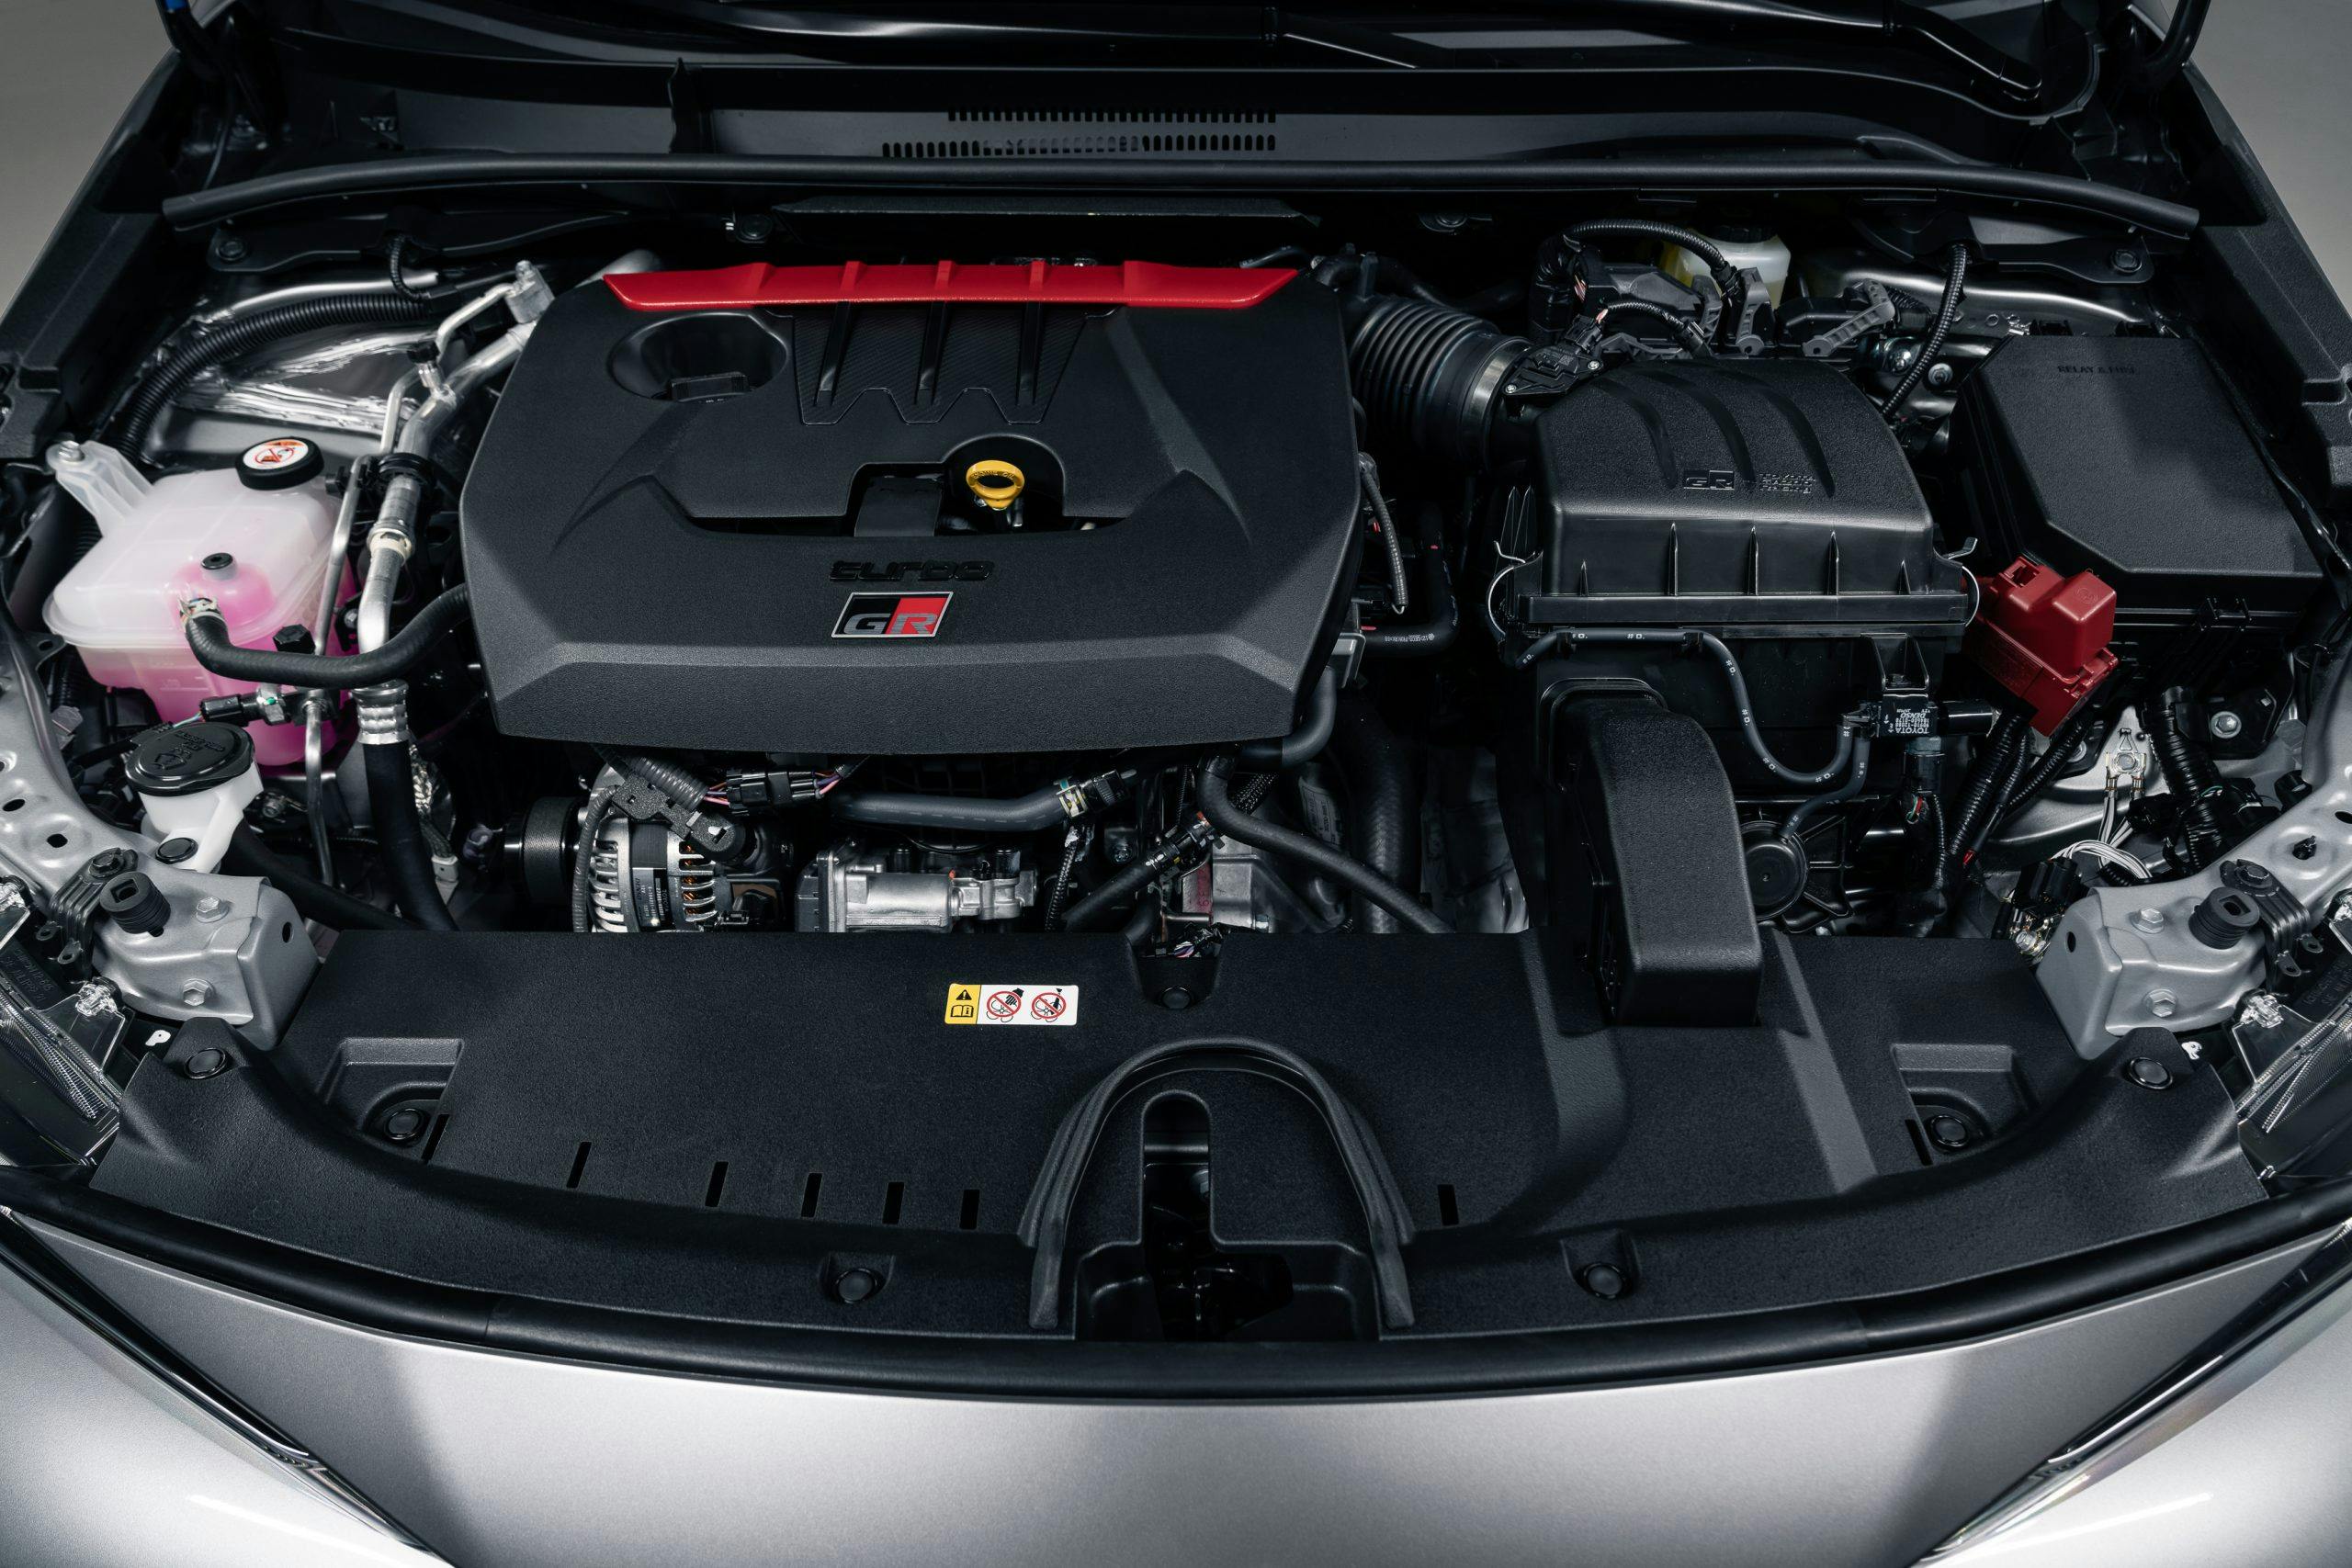 2023 Toyota GR Corolla Circuit Edition engine three cylinder G16 horsepower